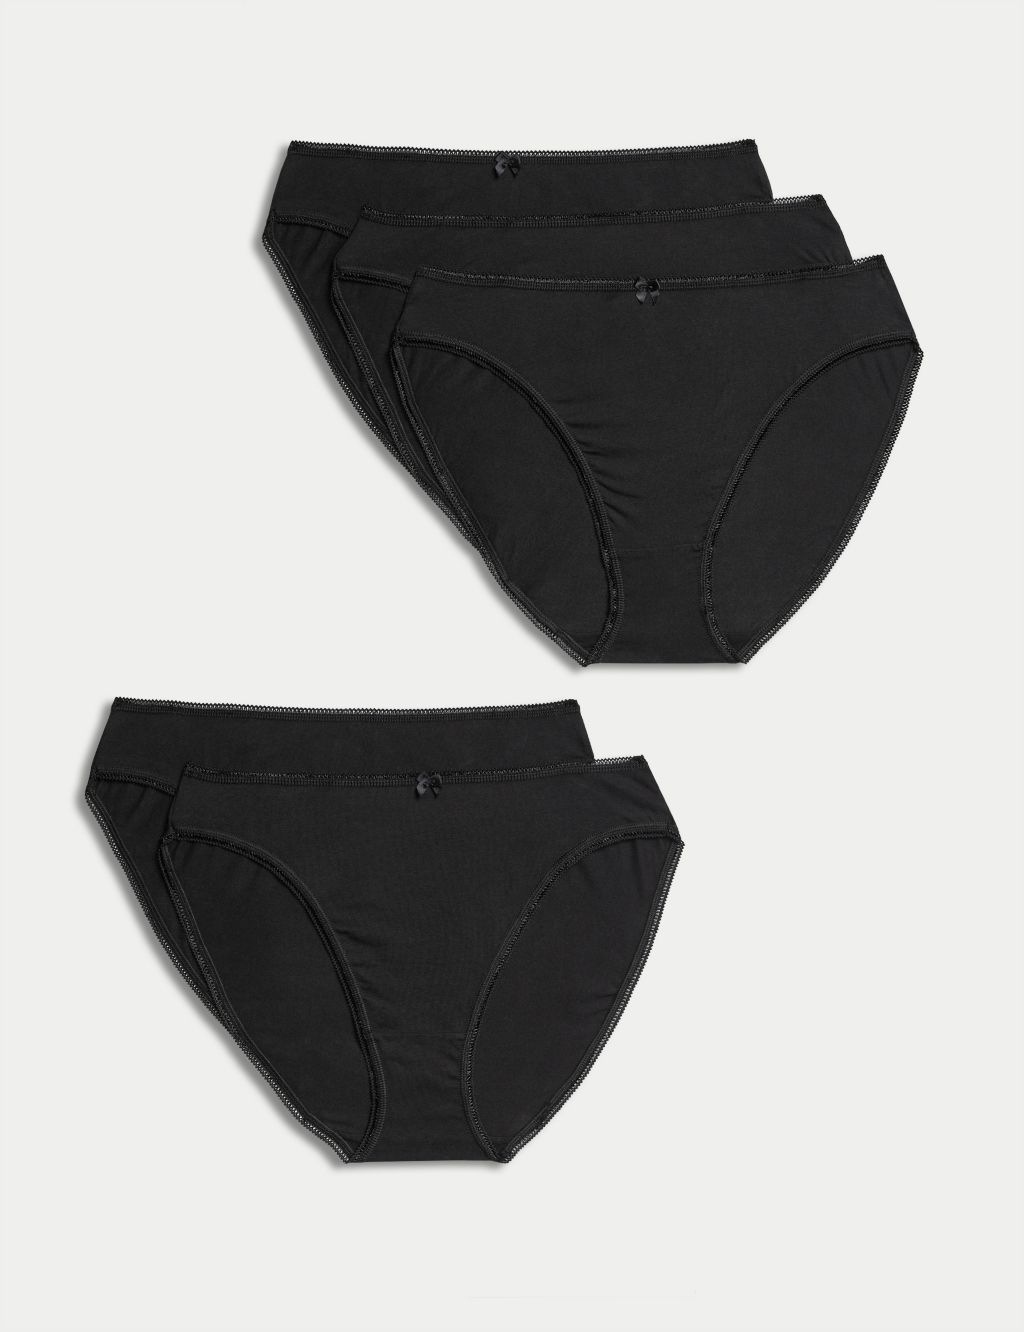 High Leg Cotton Knickers For Women Printed Underwear Women